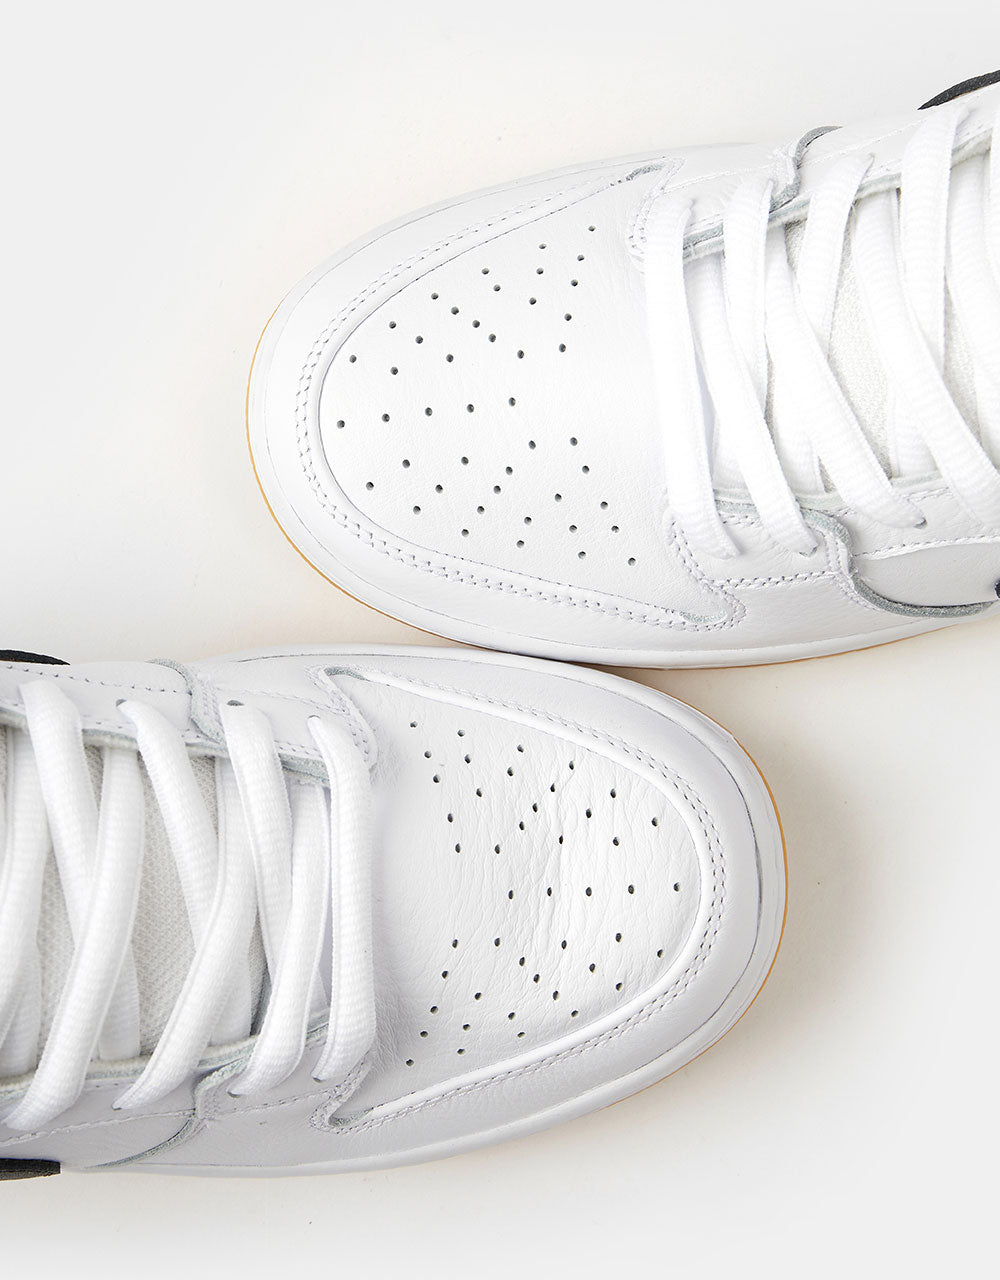 Nike SB Dunk Low Pro Premium Skate Shoes - White/Black-White-Gum Light Brown